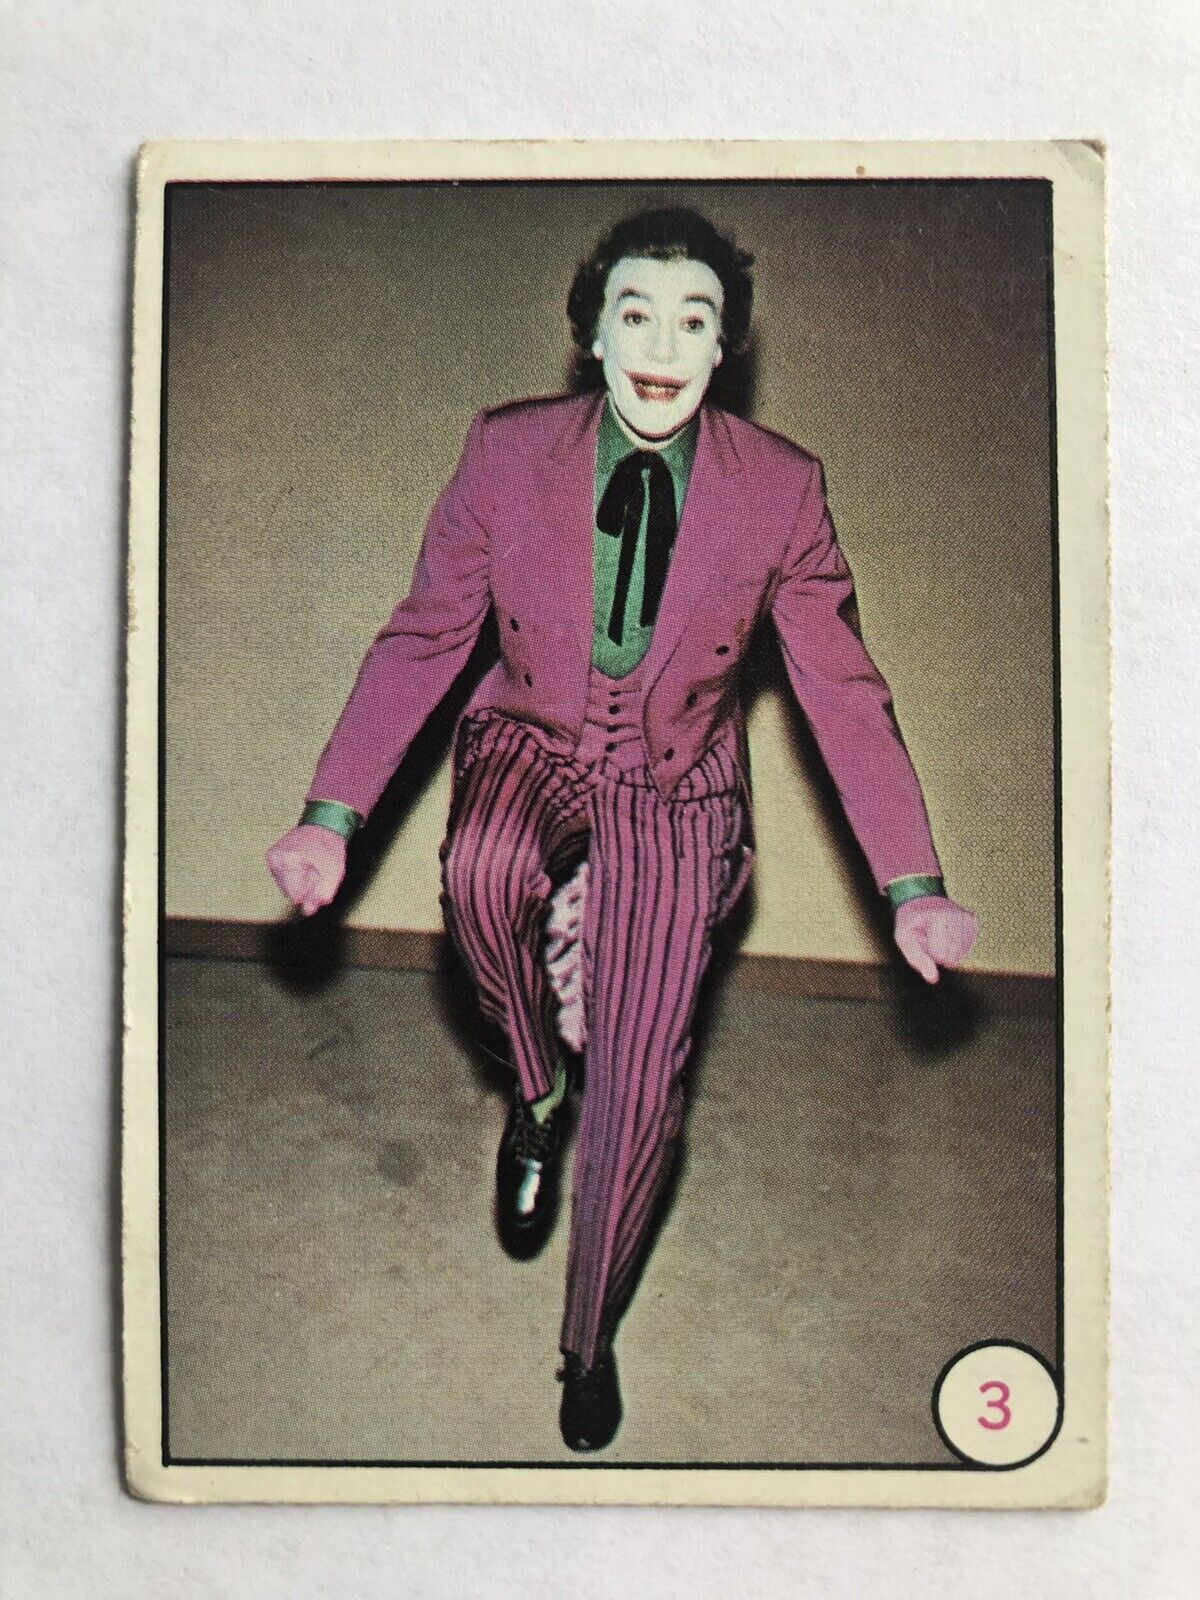 BATMAN #3 - BAT LAFFS - Topps trading card 1966 Joker. printed in U.S.A